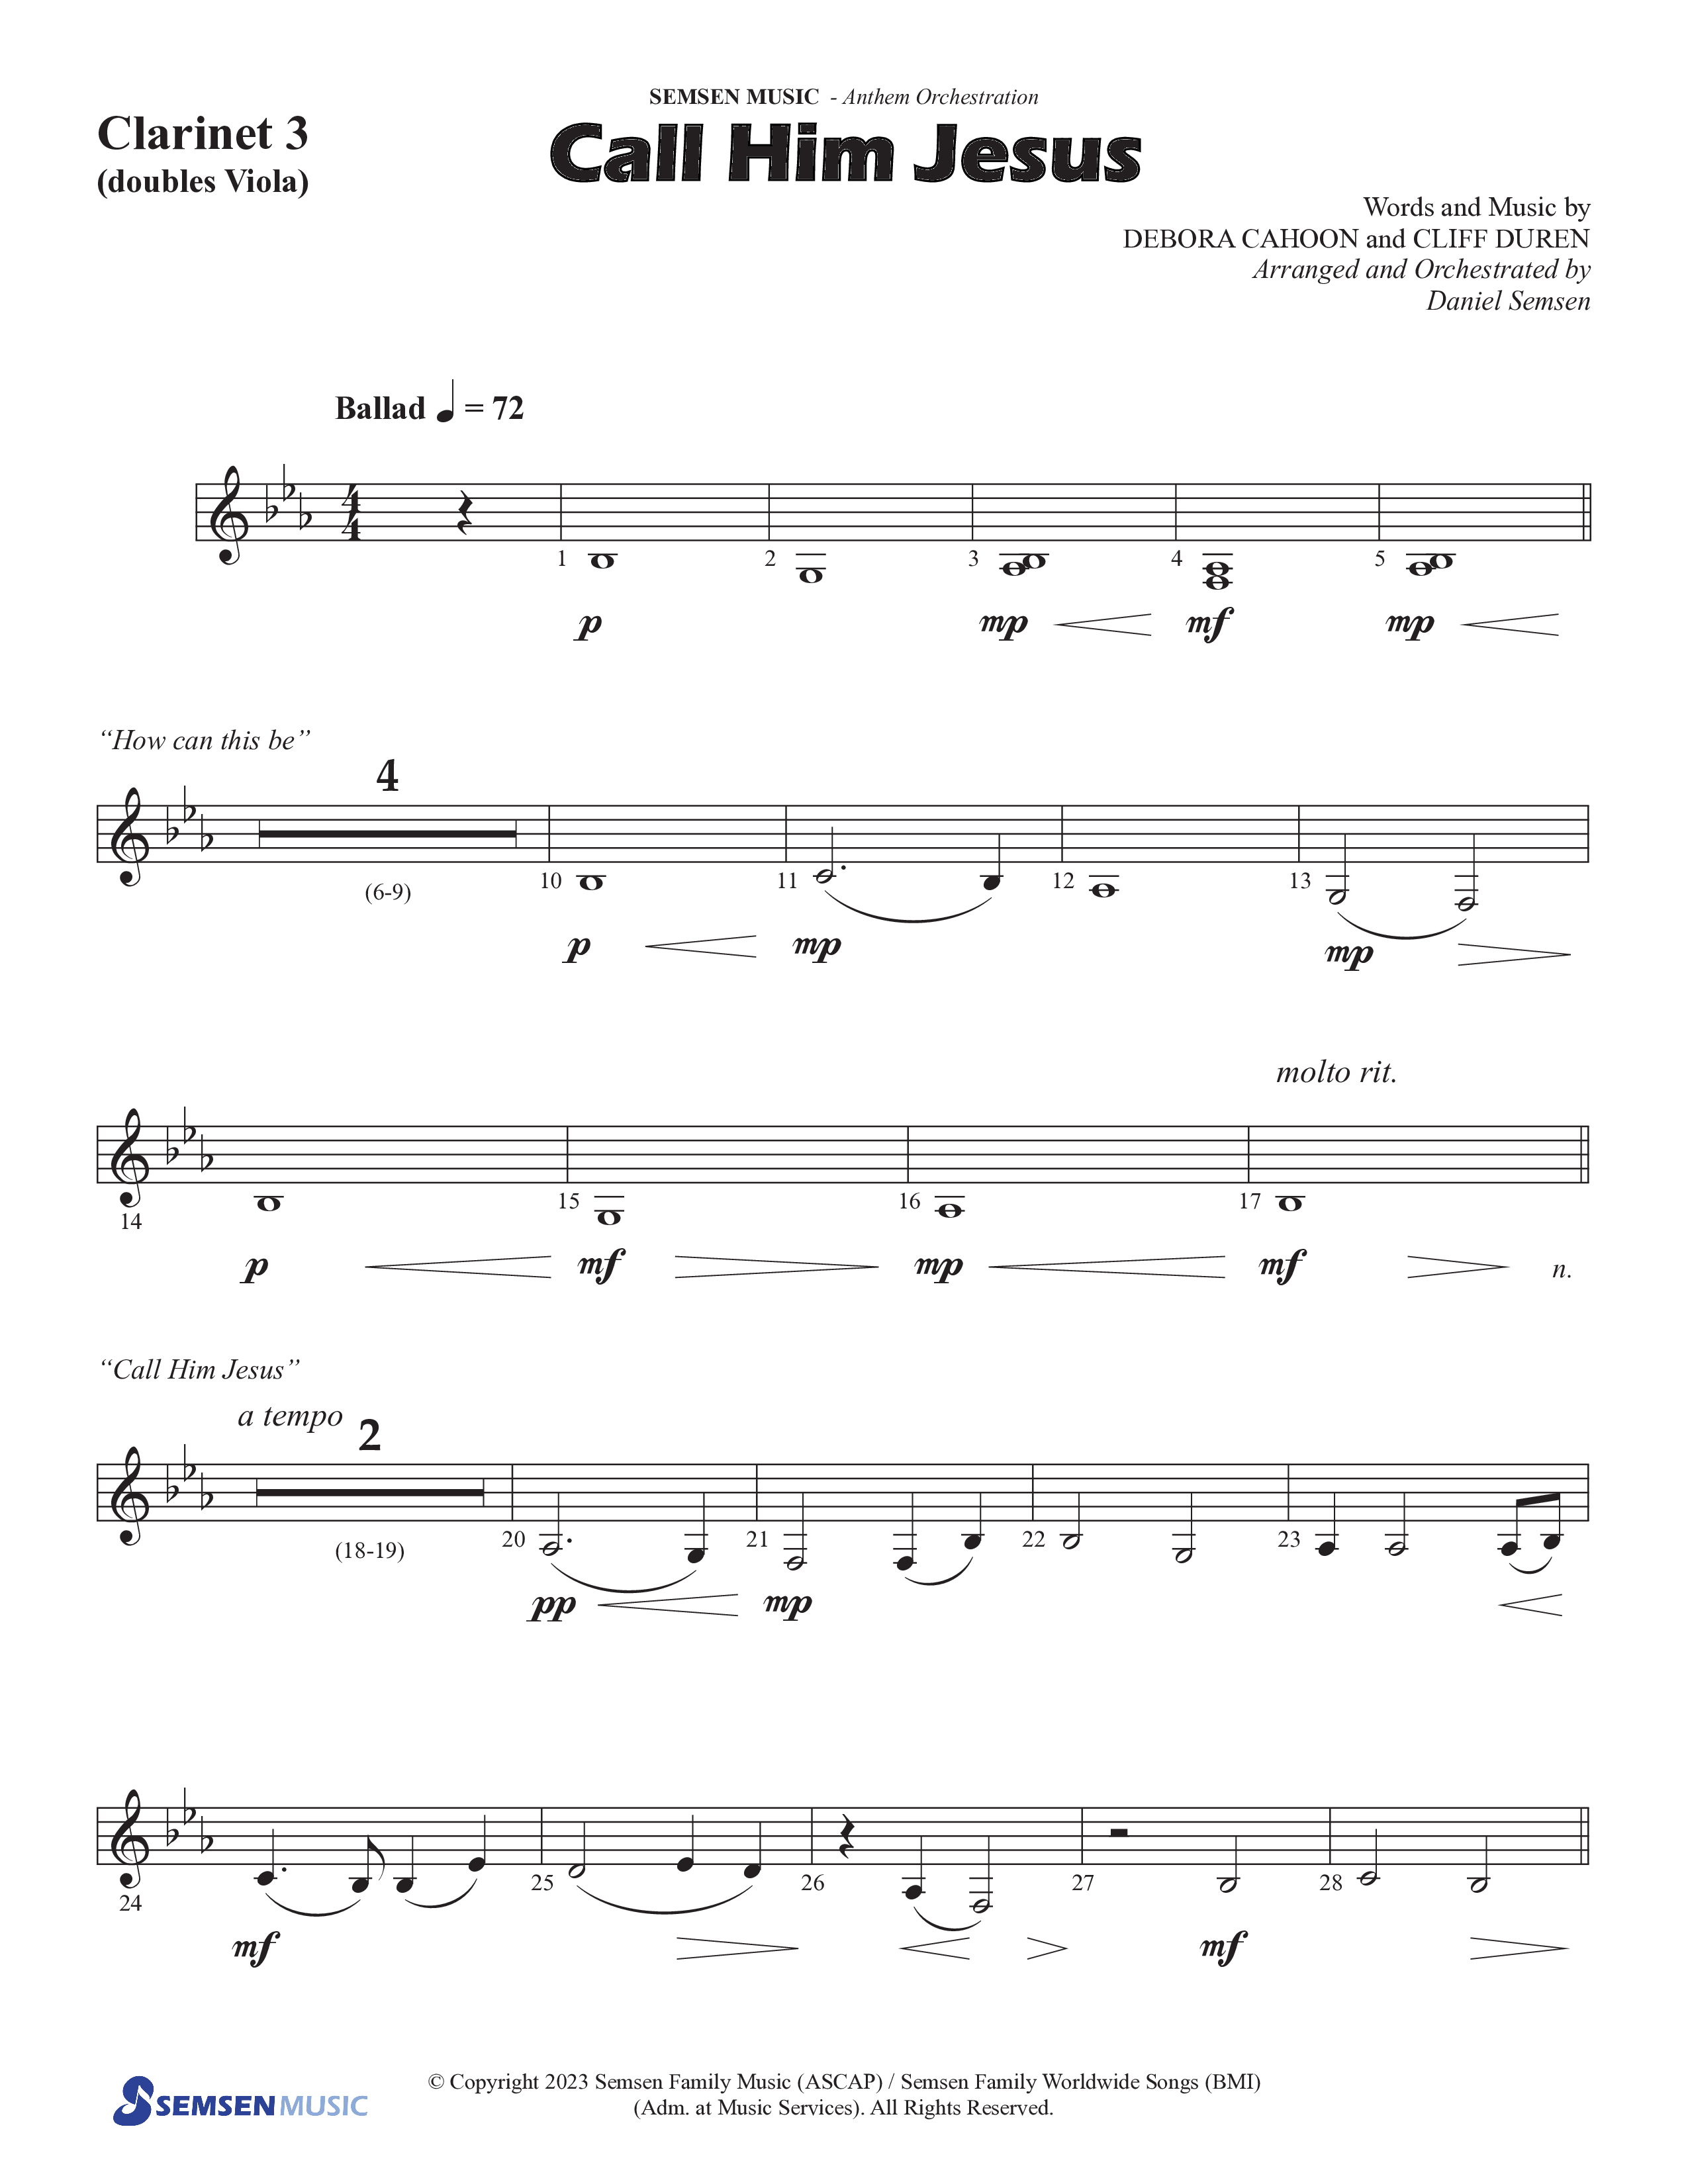 Call Him Jesus (Choral Anthem SATB) Clarinet 3 (Semsen Music / Arr. Daniel Semsen)